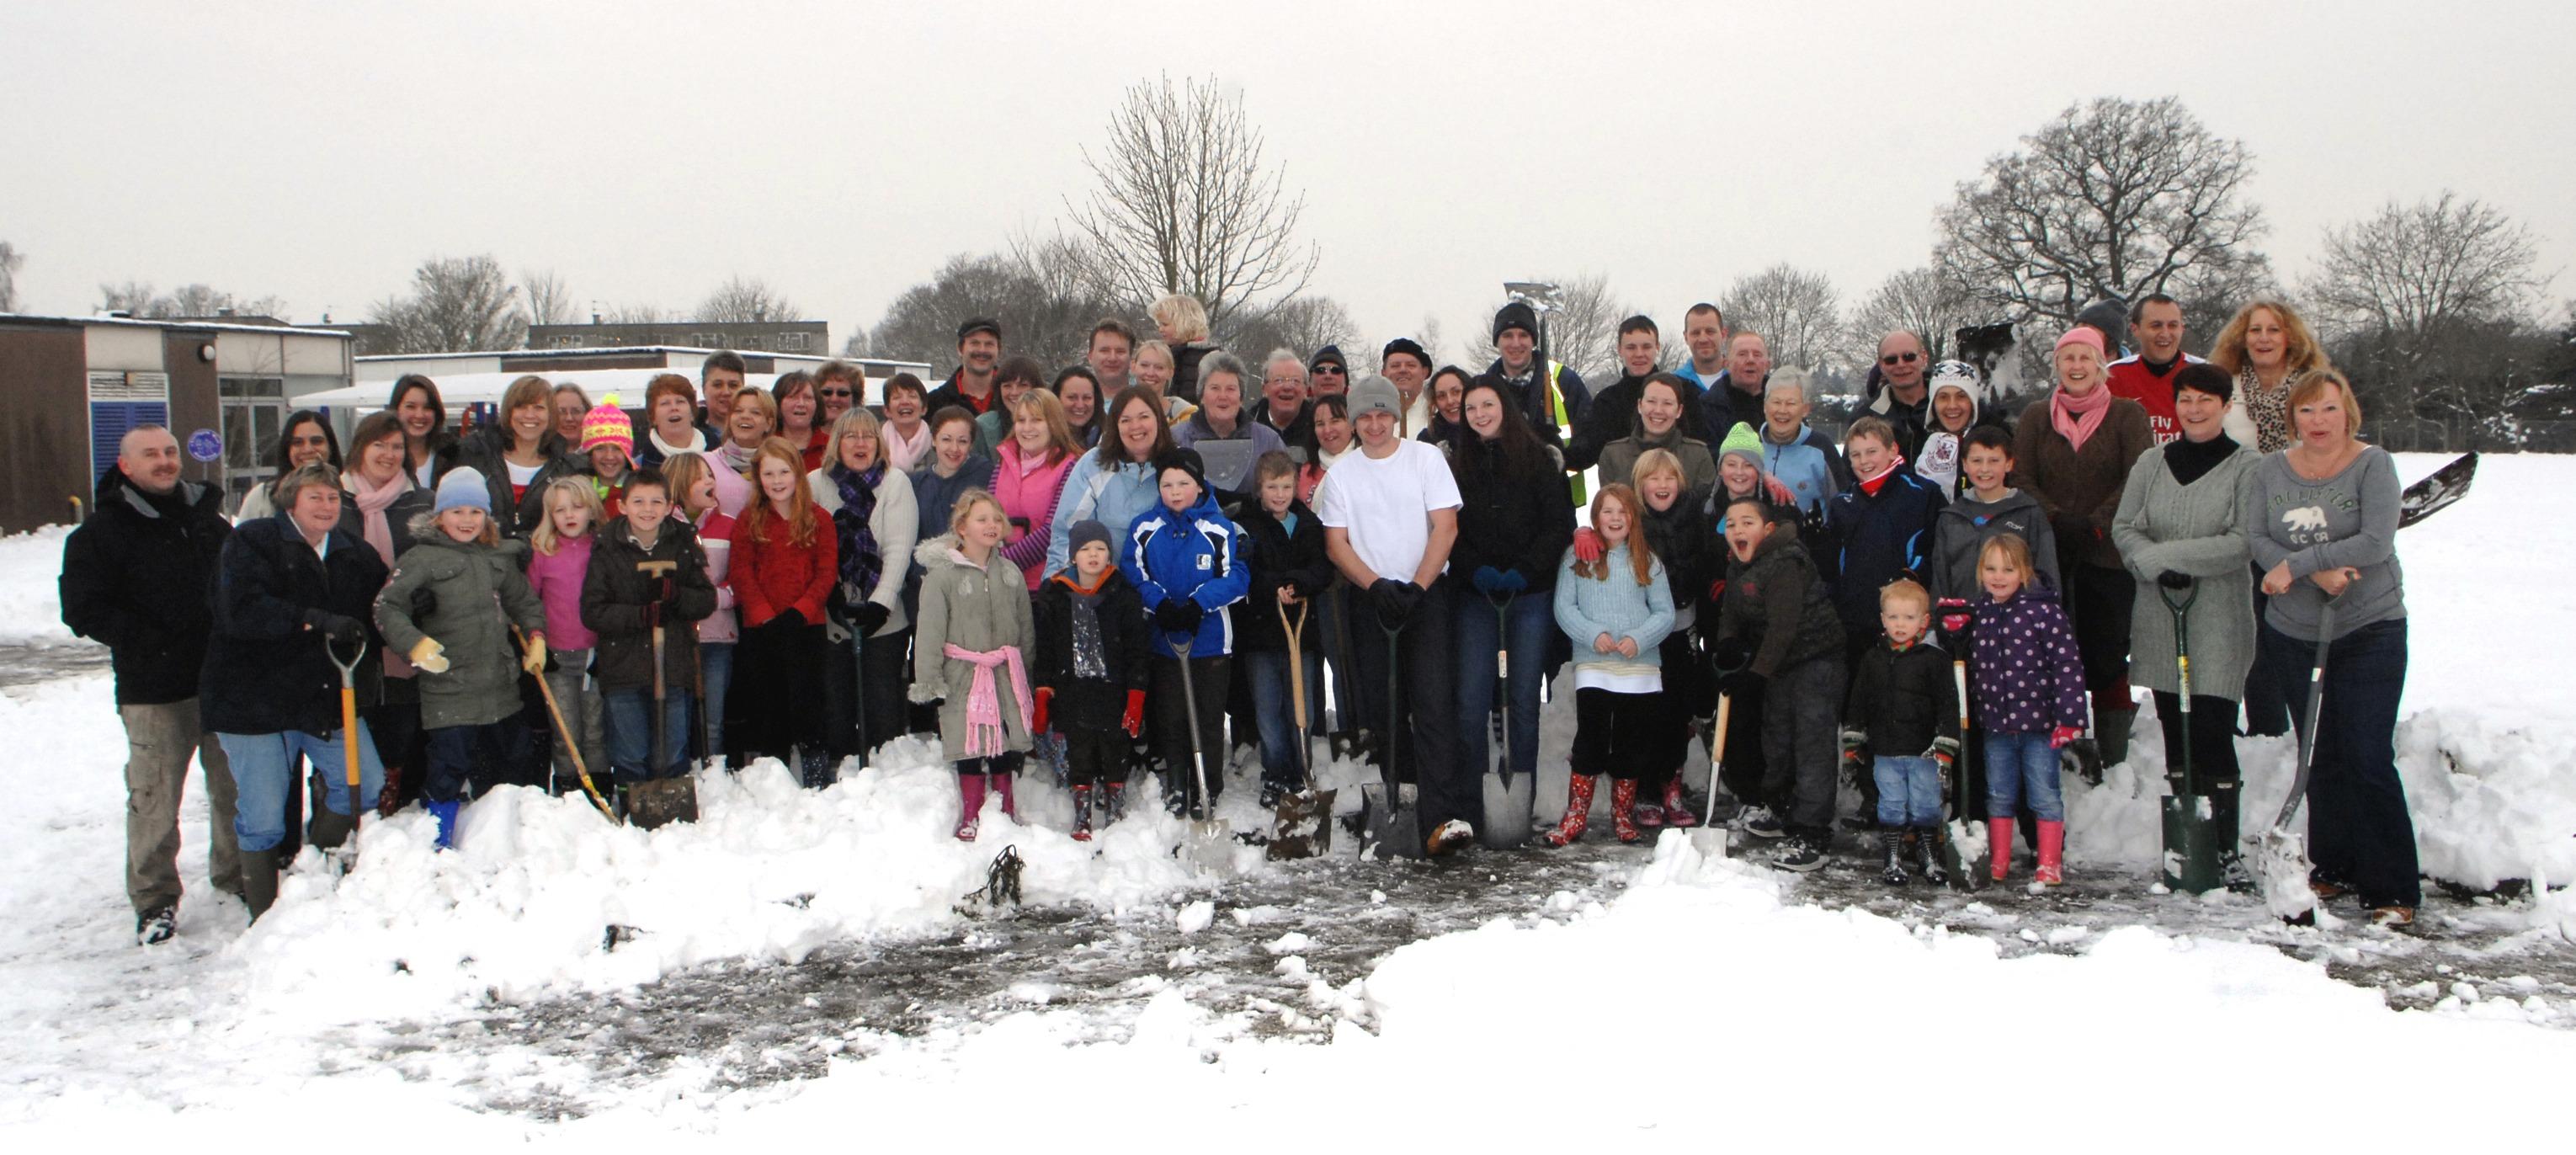 jpco-13-1-10-snow in crawley - hill top school teachers,parents & kids clear snow